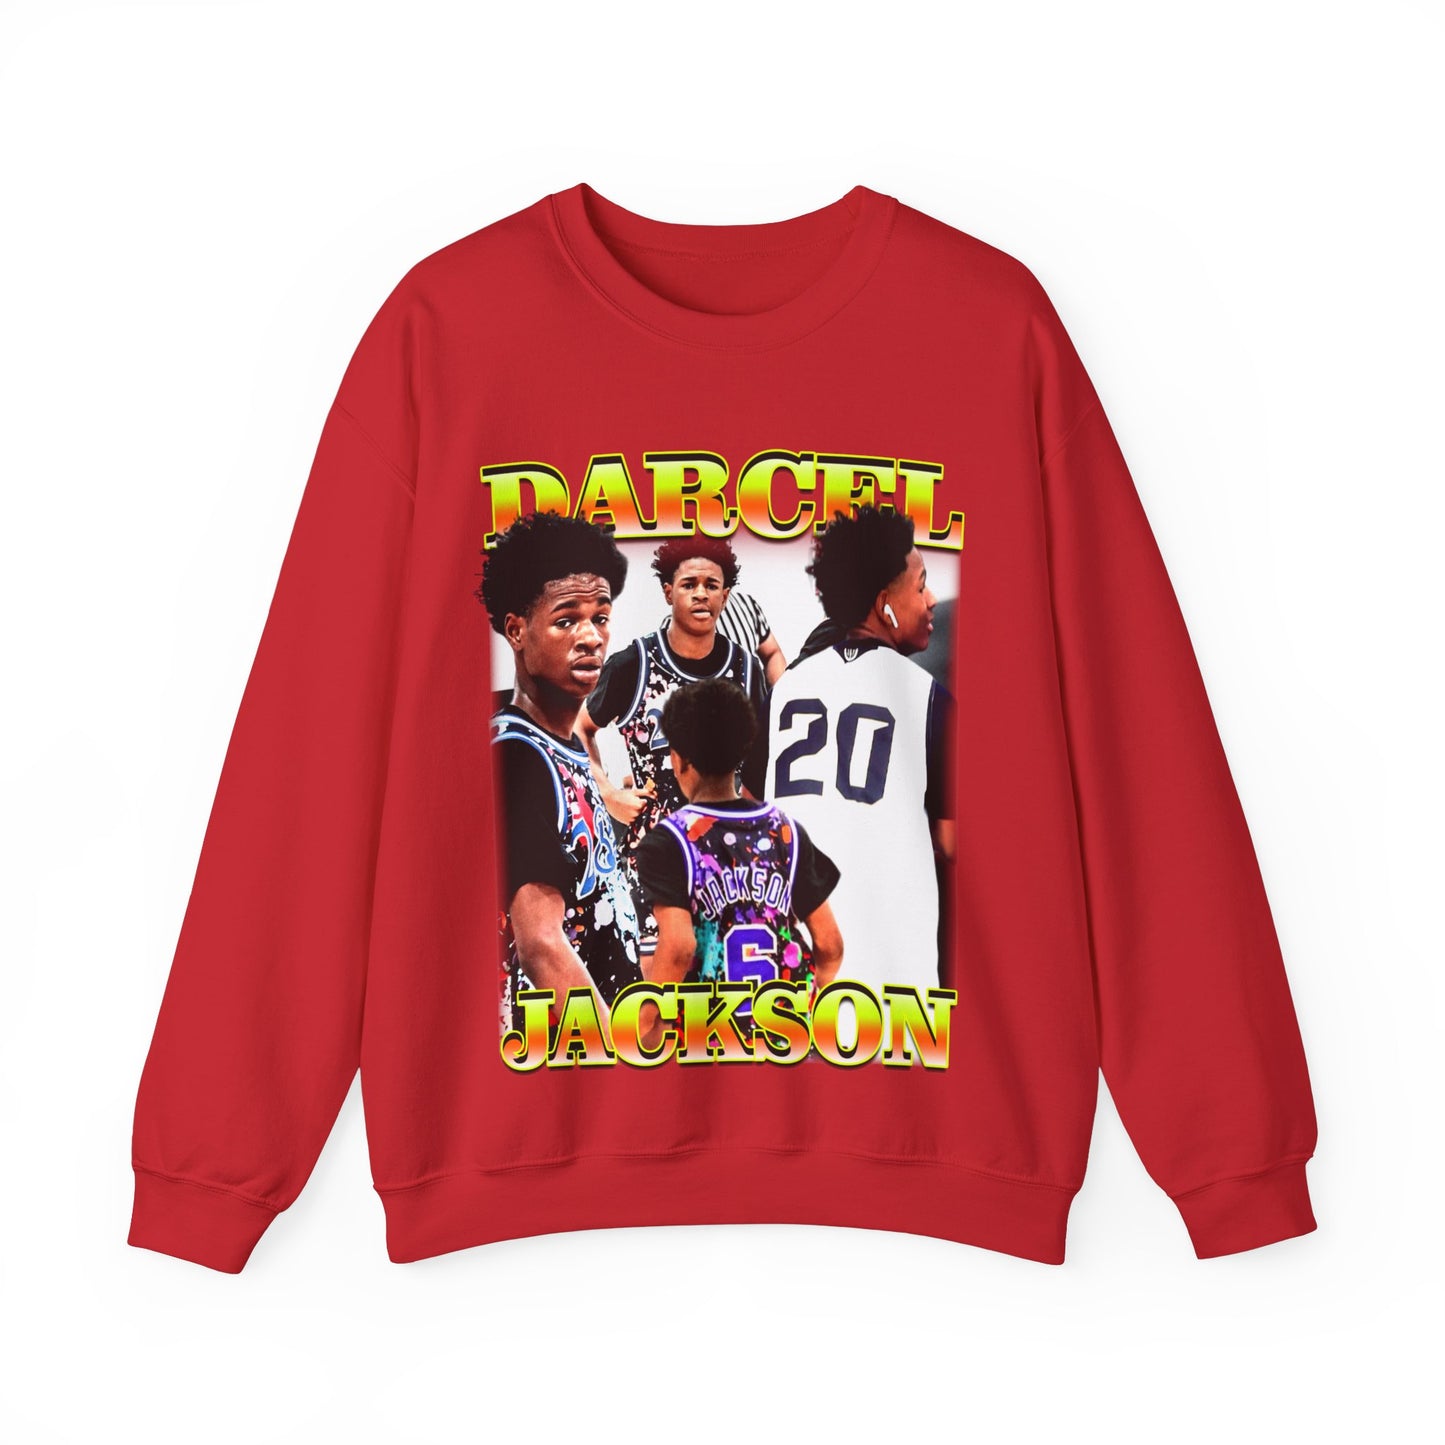 Darcel Jackson Crewneck Sweatshirt